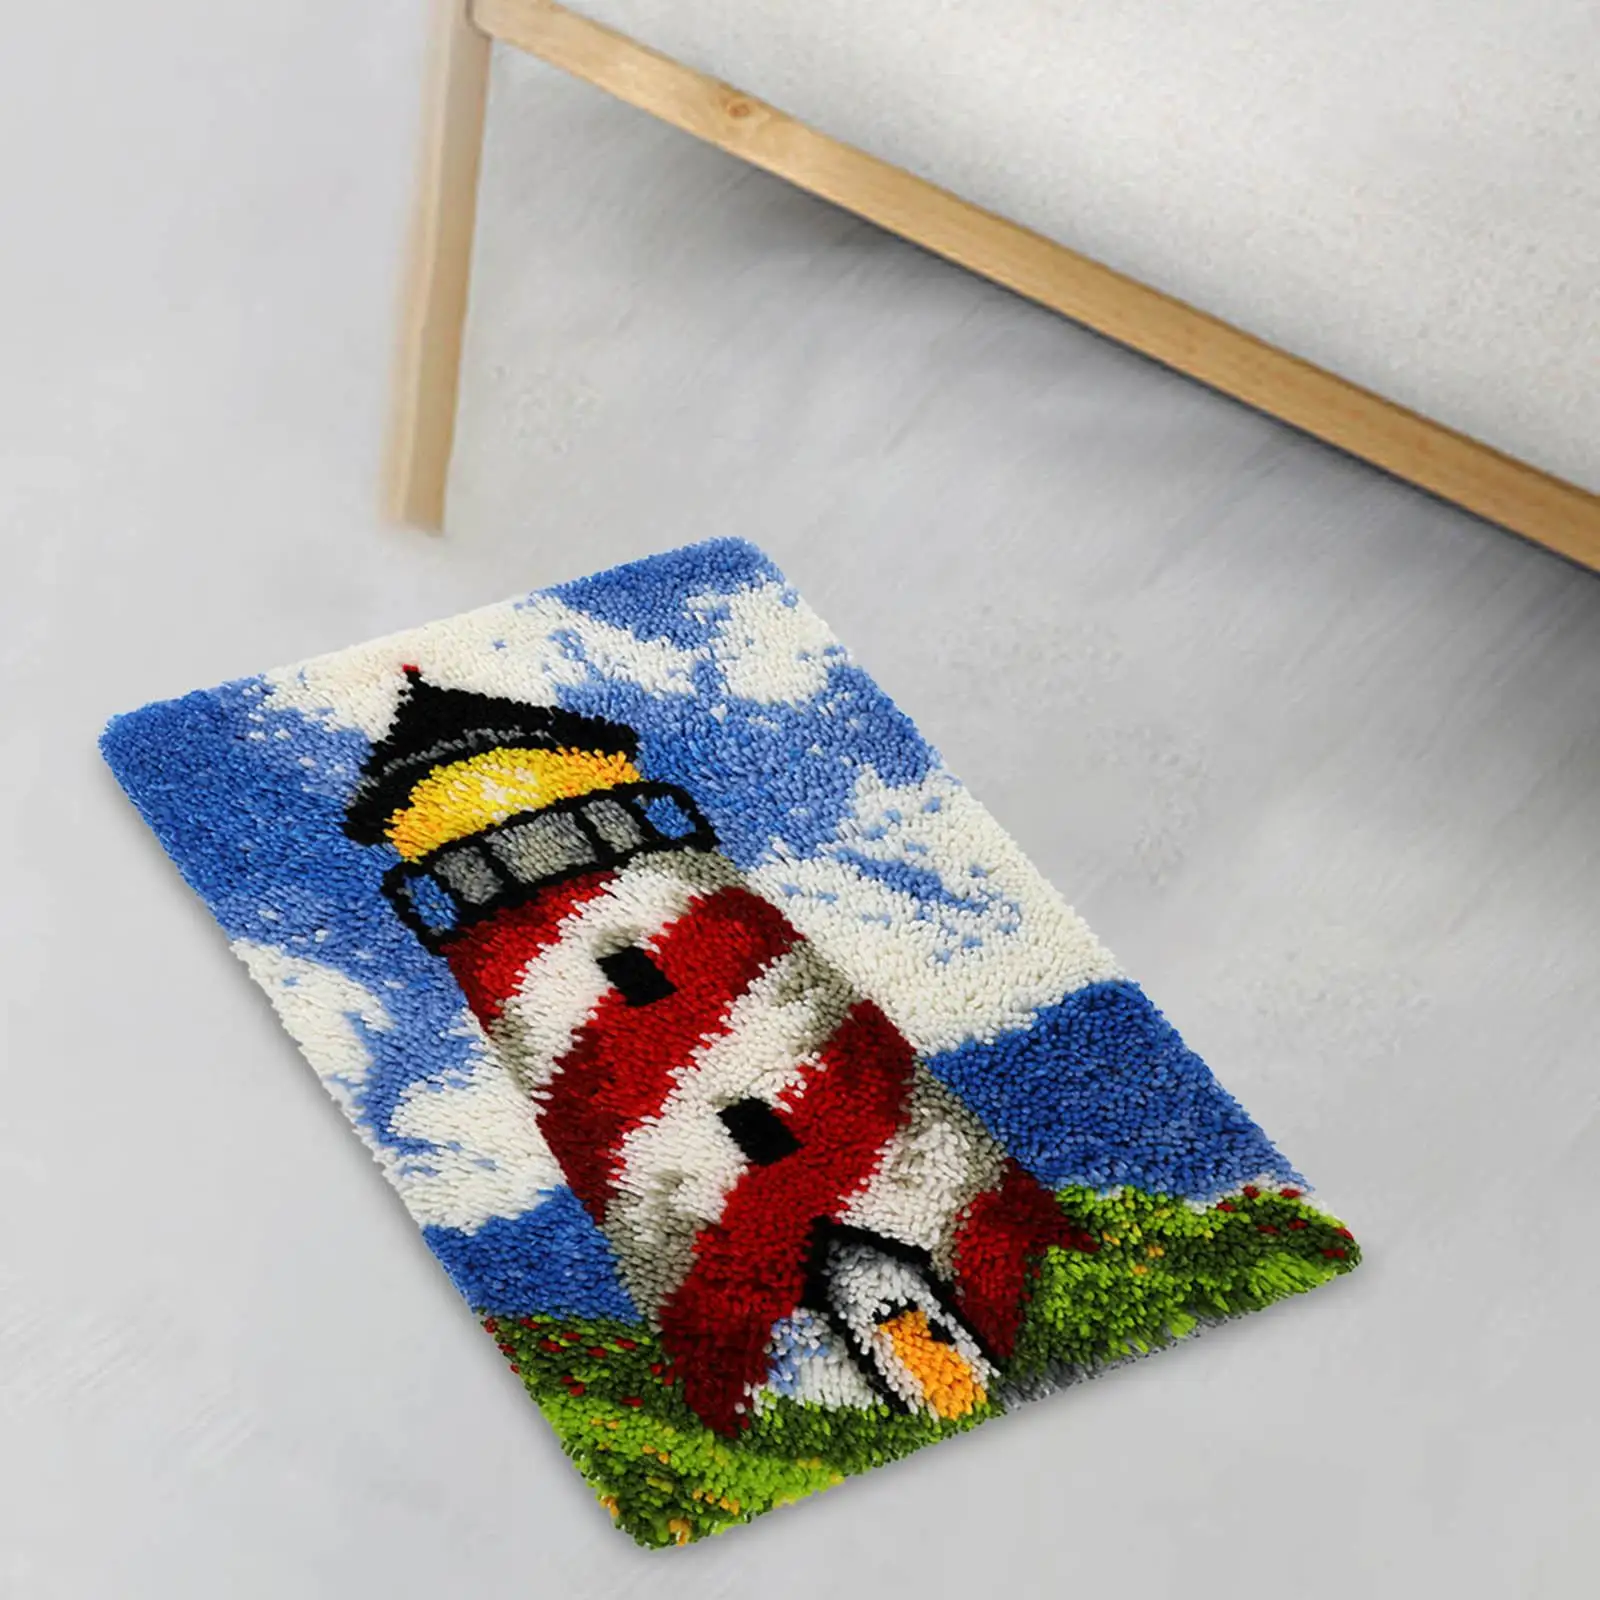 DIY Latch Hook Craft Kit Embroidery Yarn Kits Crochet Carpet for Home Decor Festival